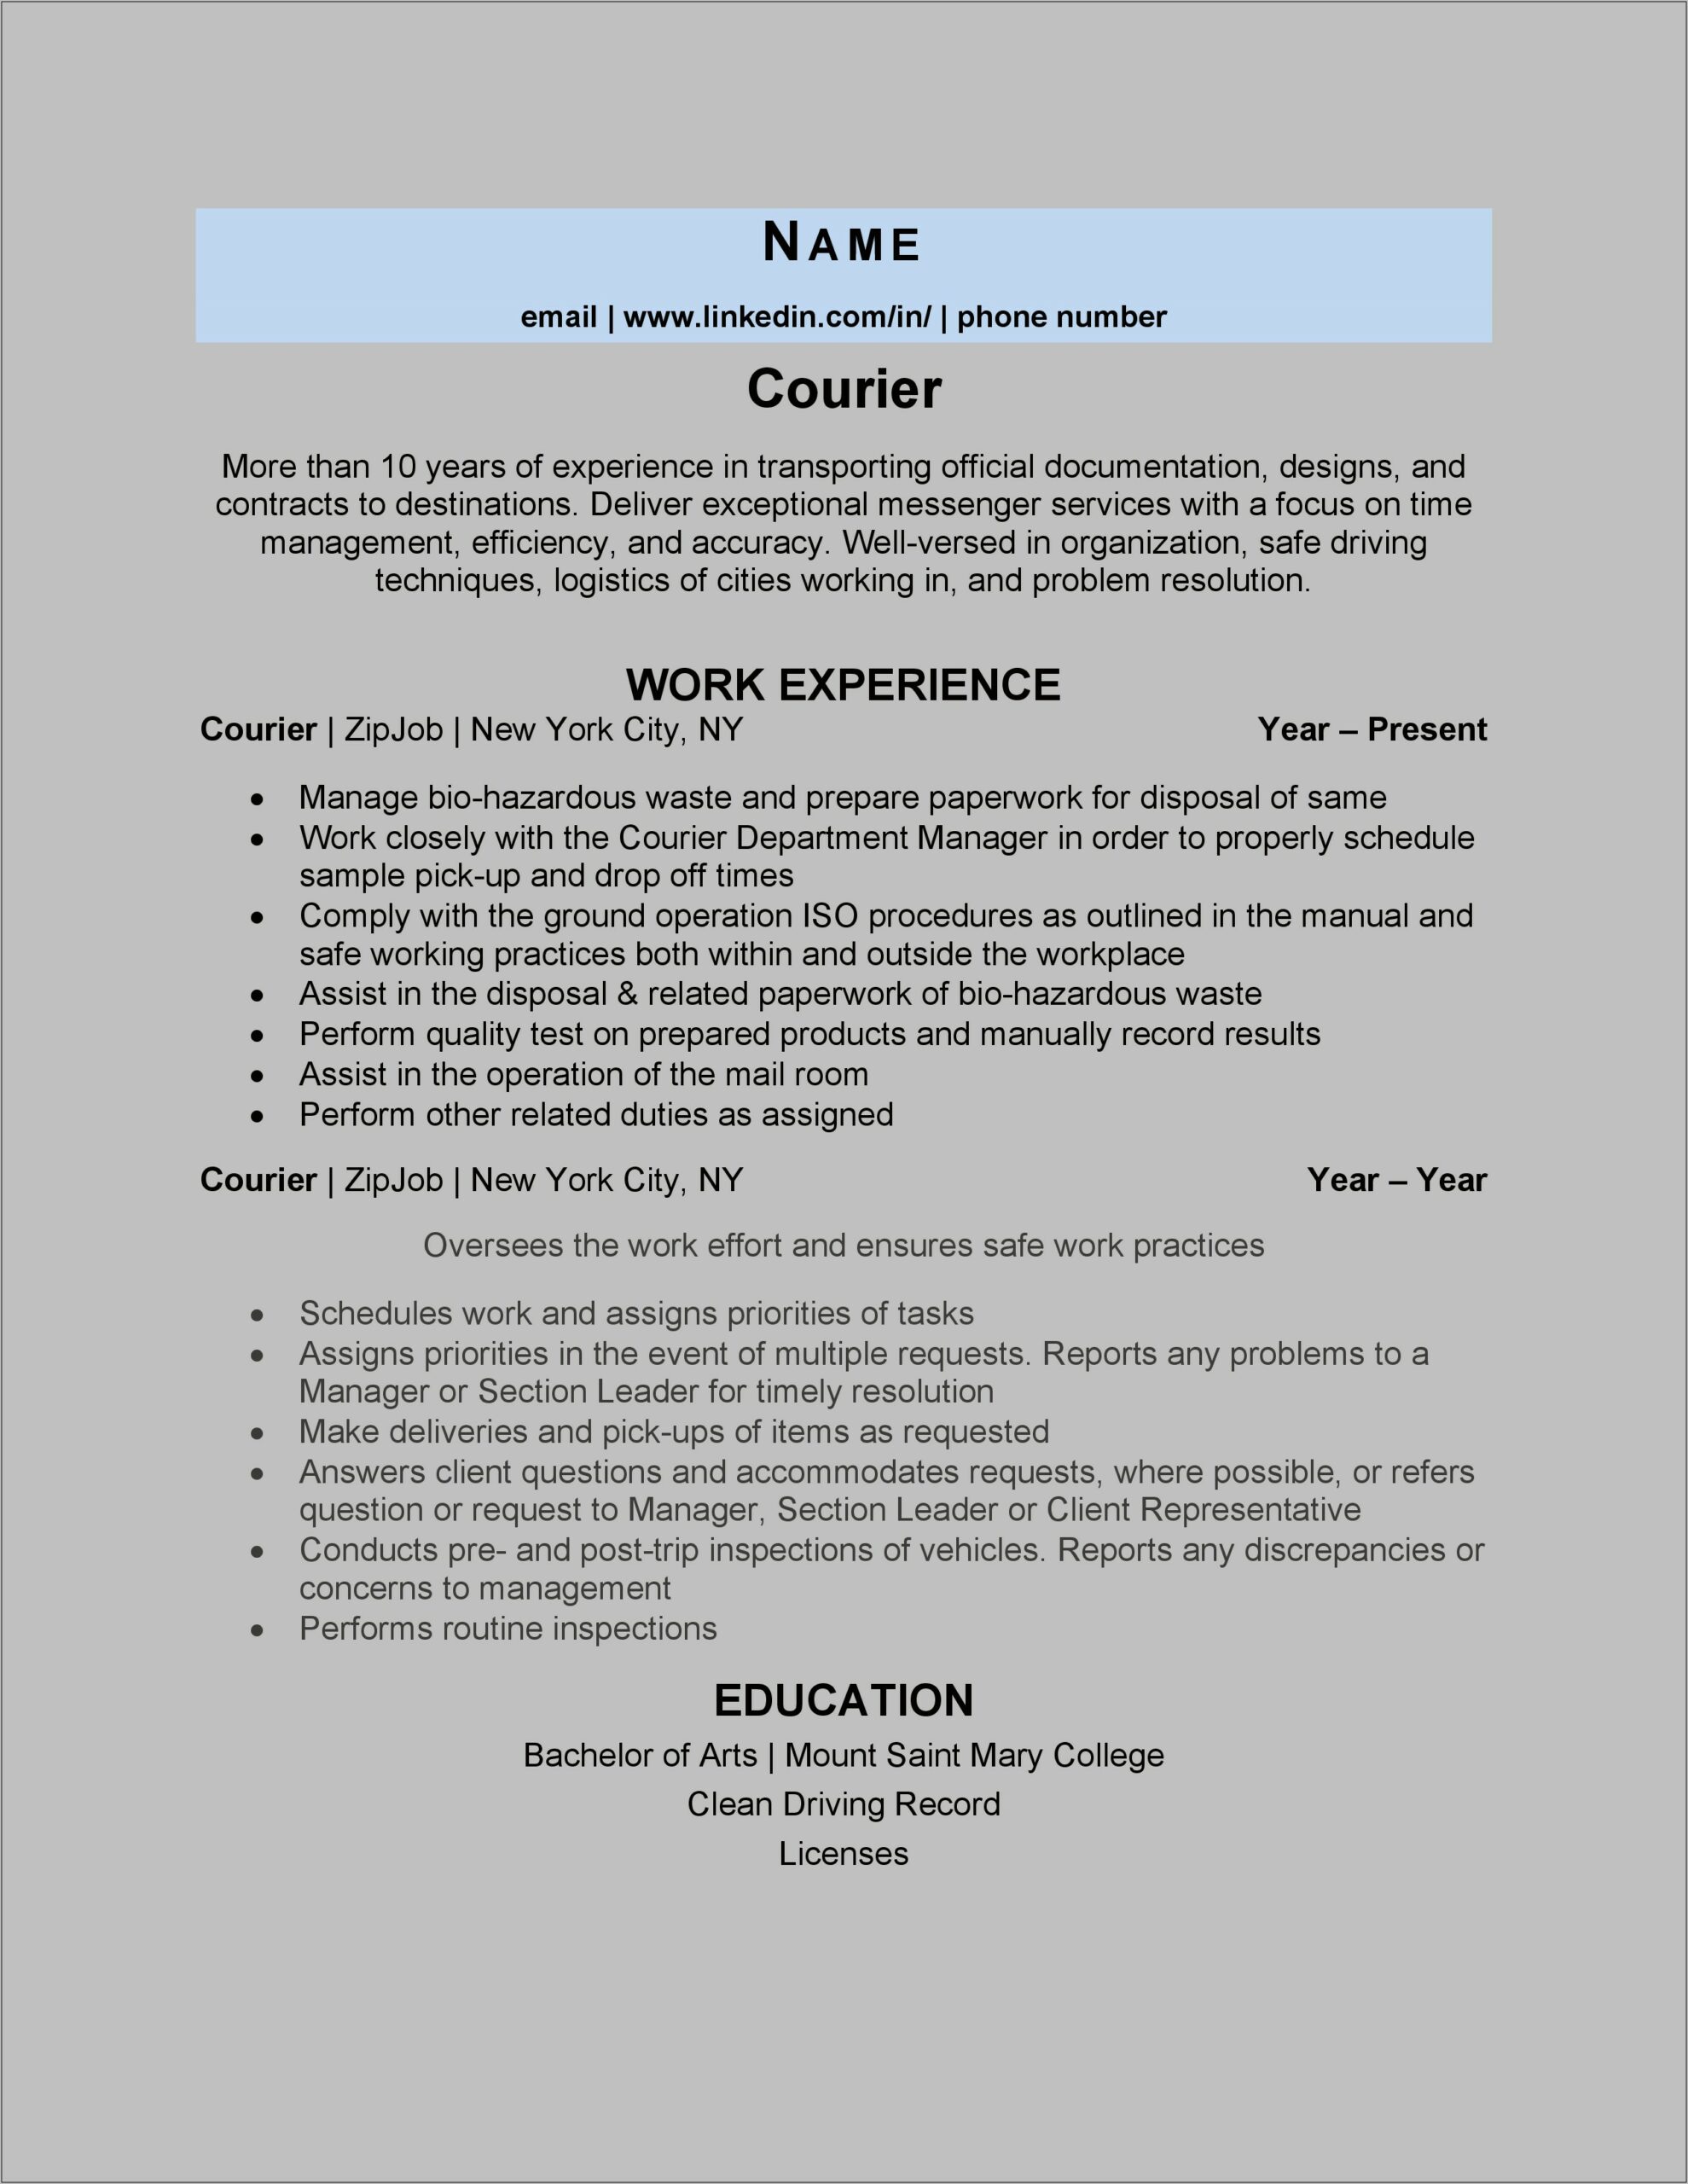 Courier Delivery Expert Job Description For Resume